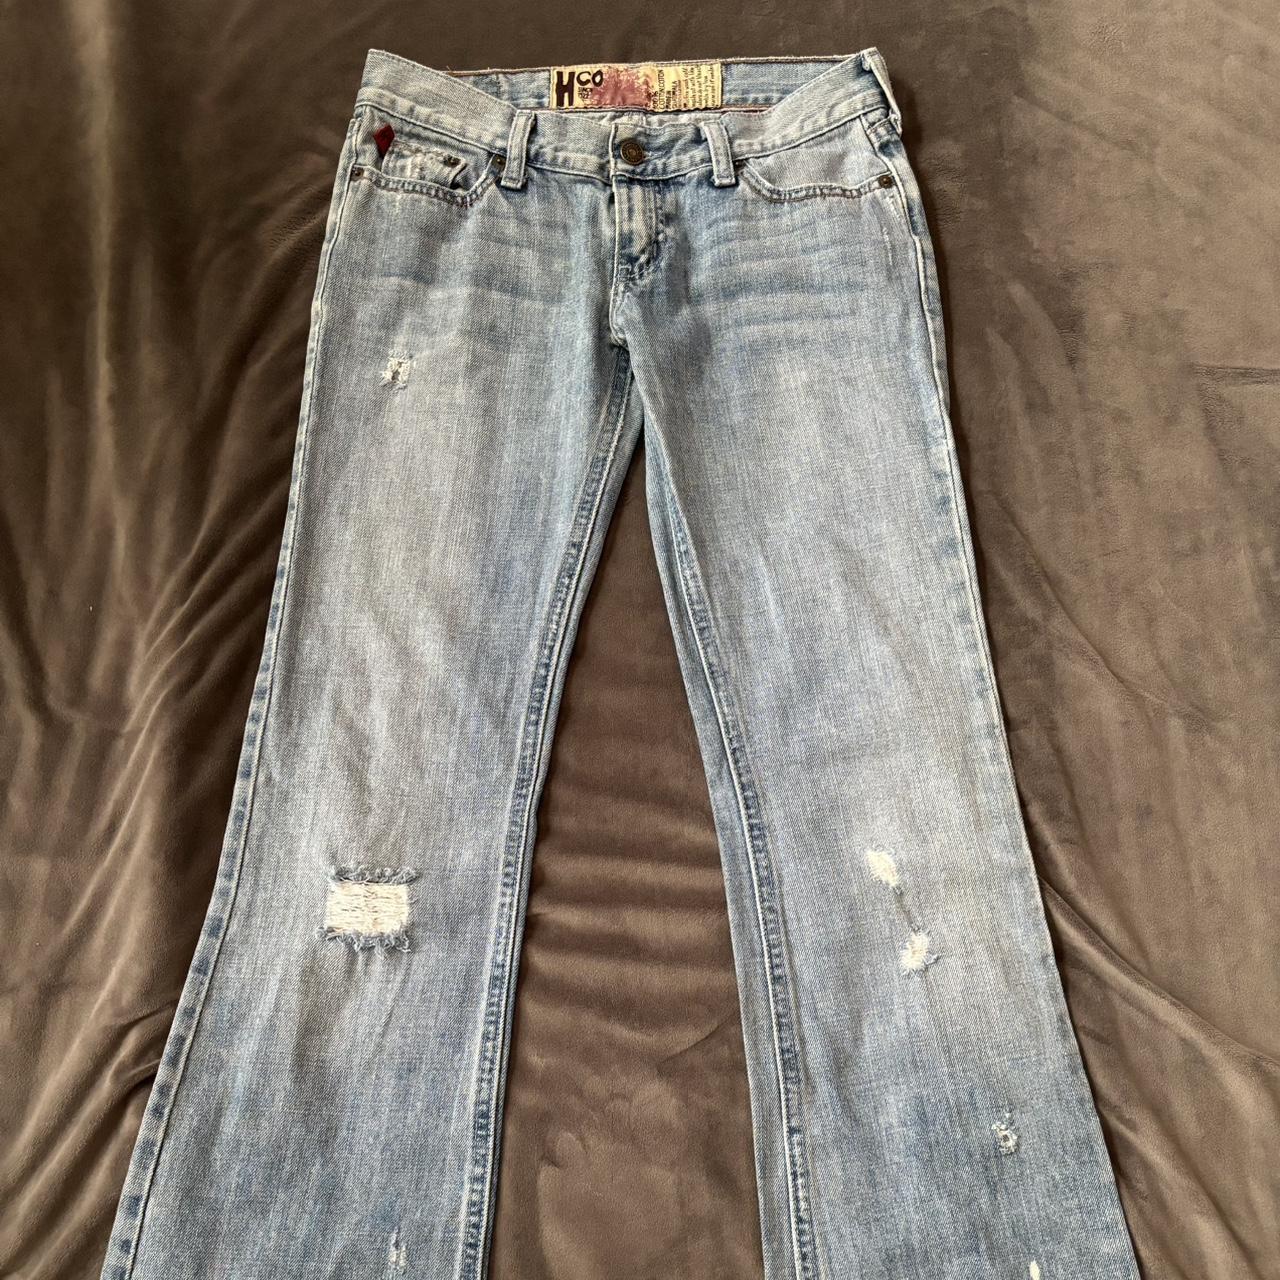 Vintage 2000’s low rise hollister jeans. Size 0,... - Depop